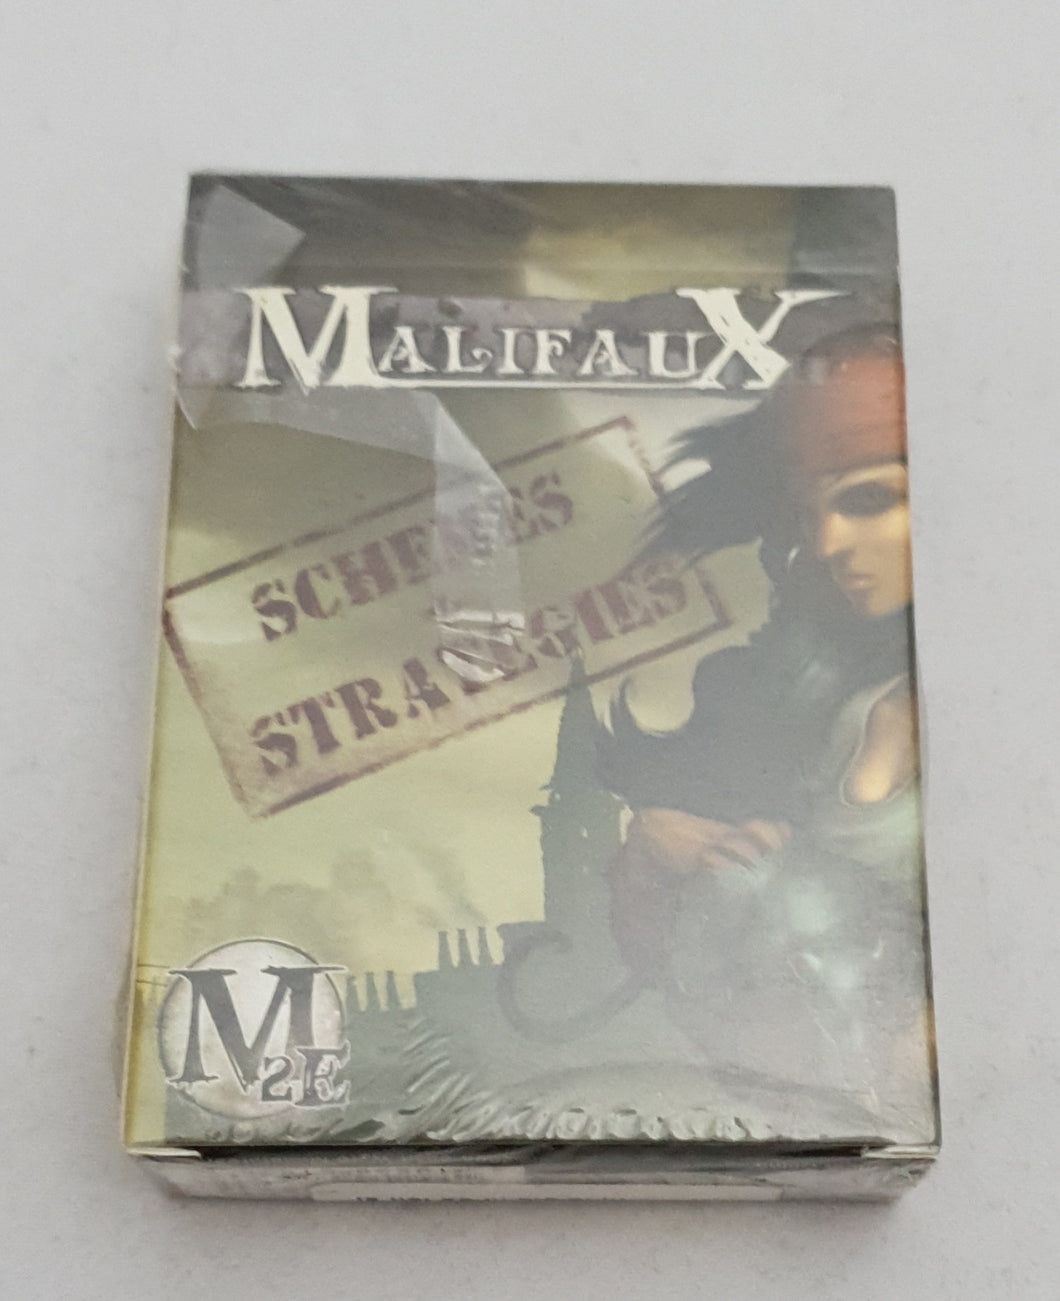 Malifaux cards